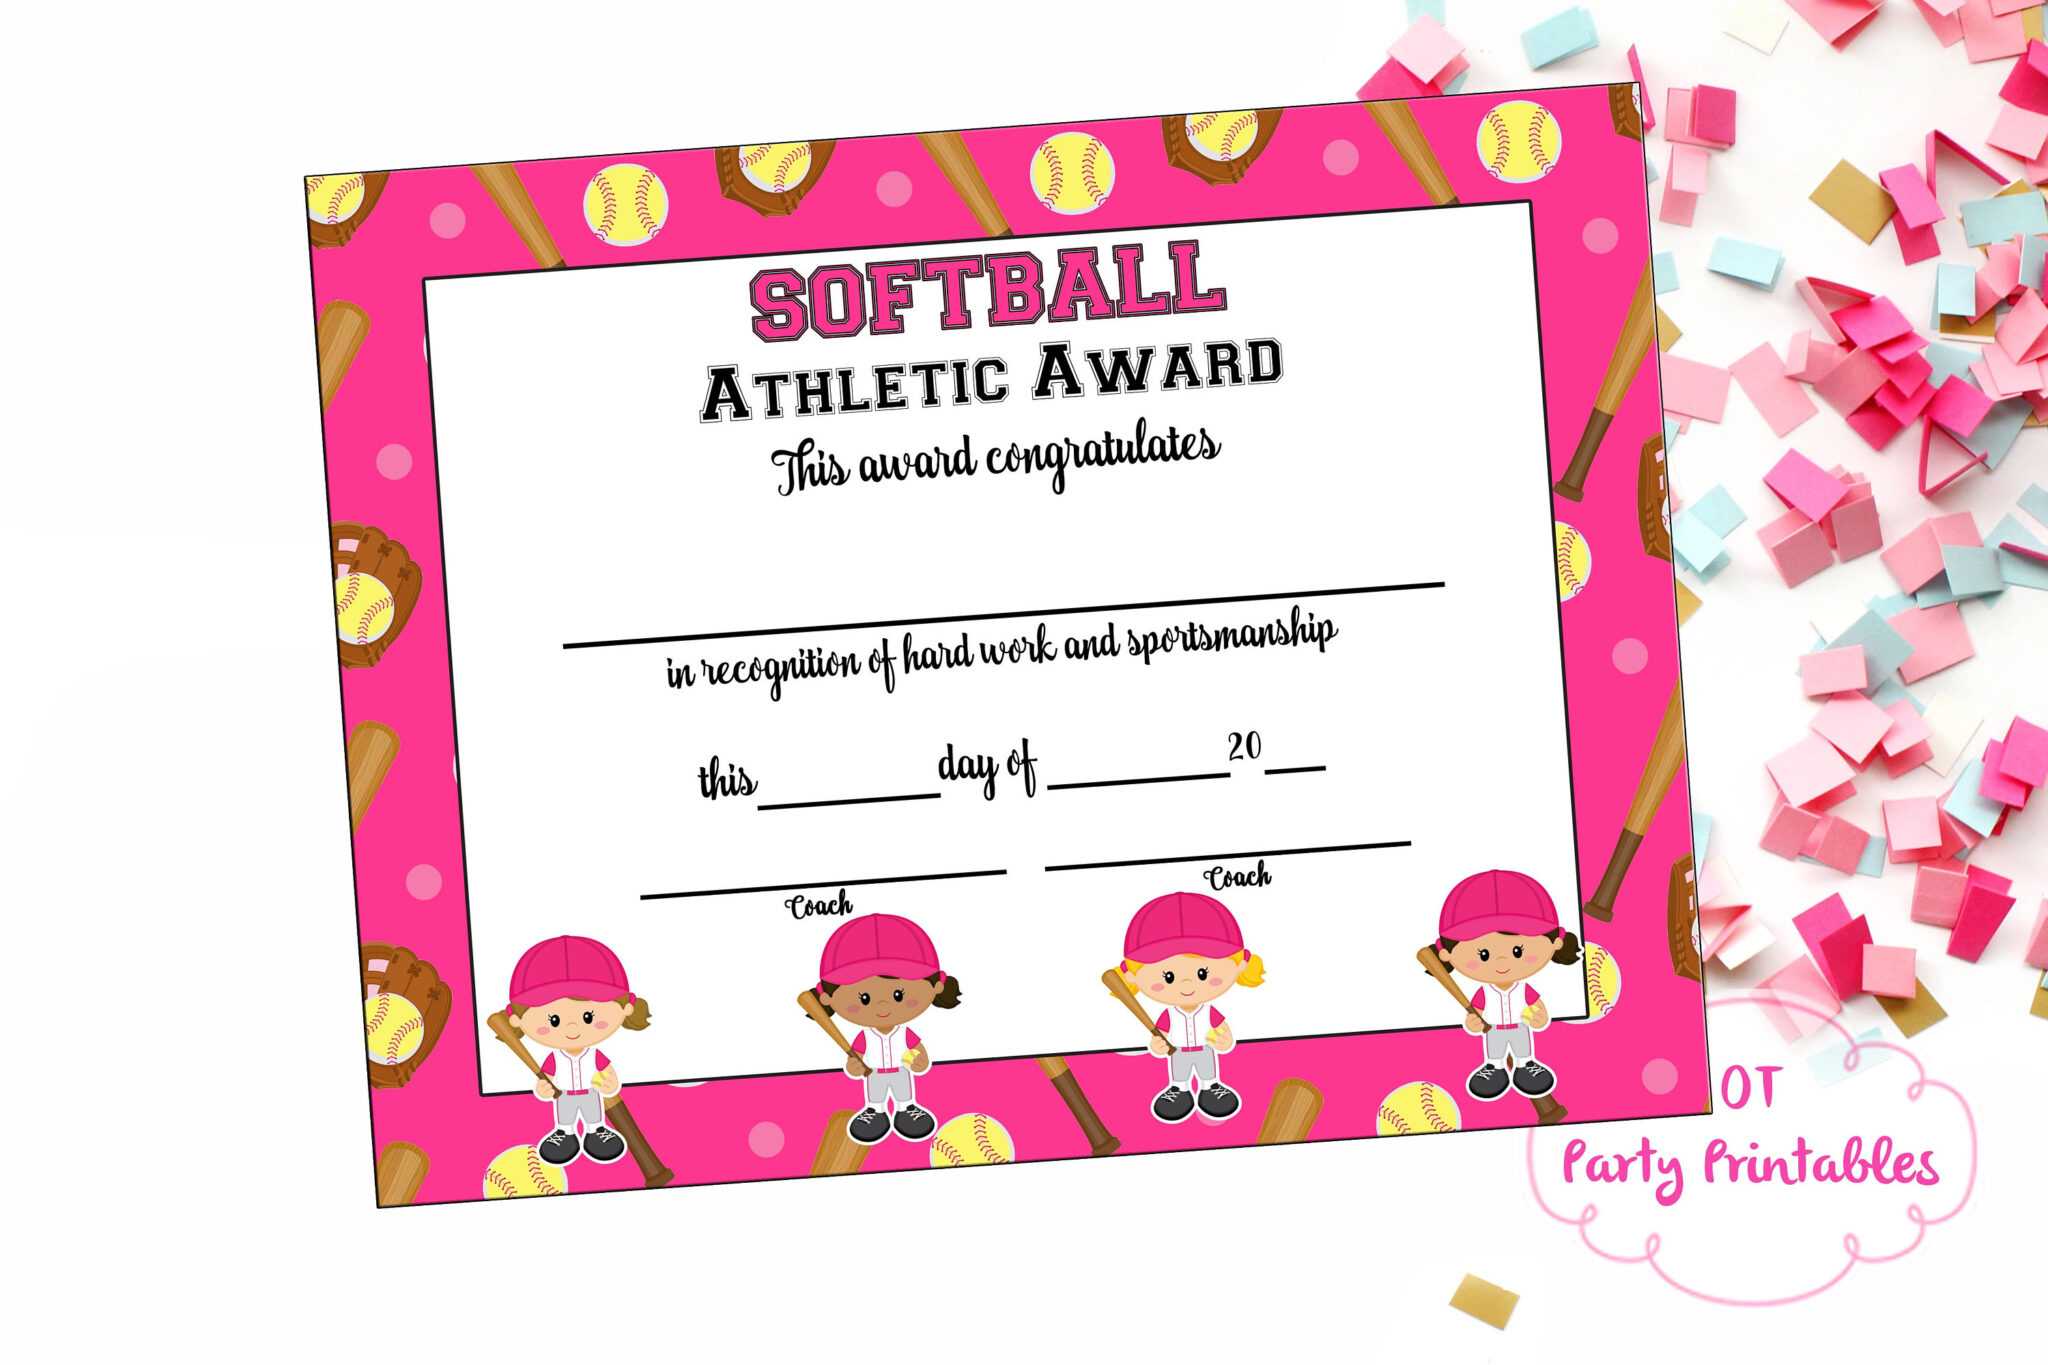 Softball Certificate Of Achievement Softball Award Print At Home